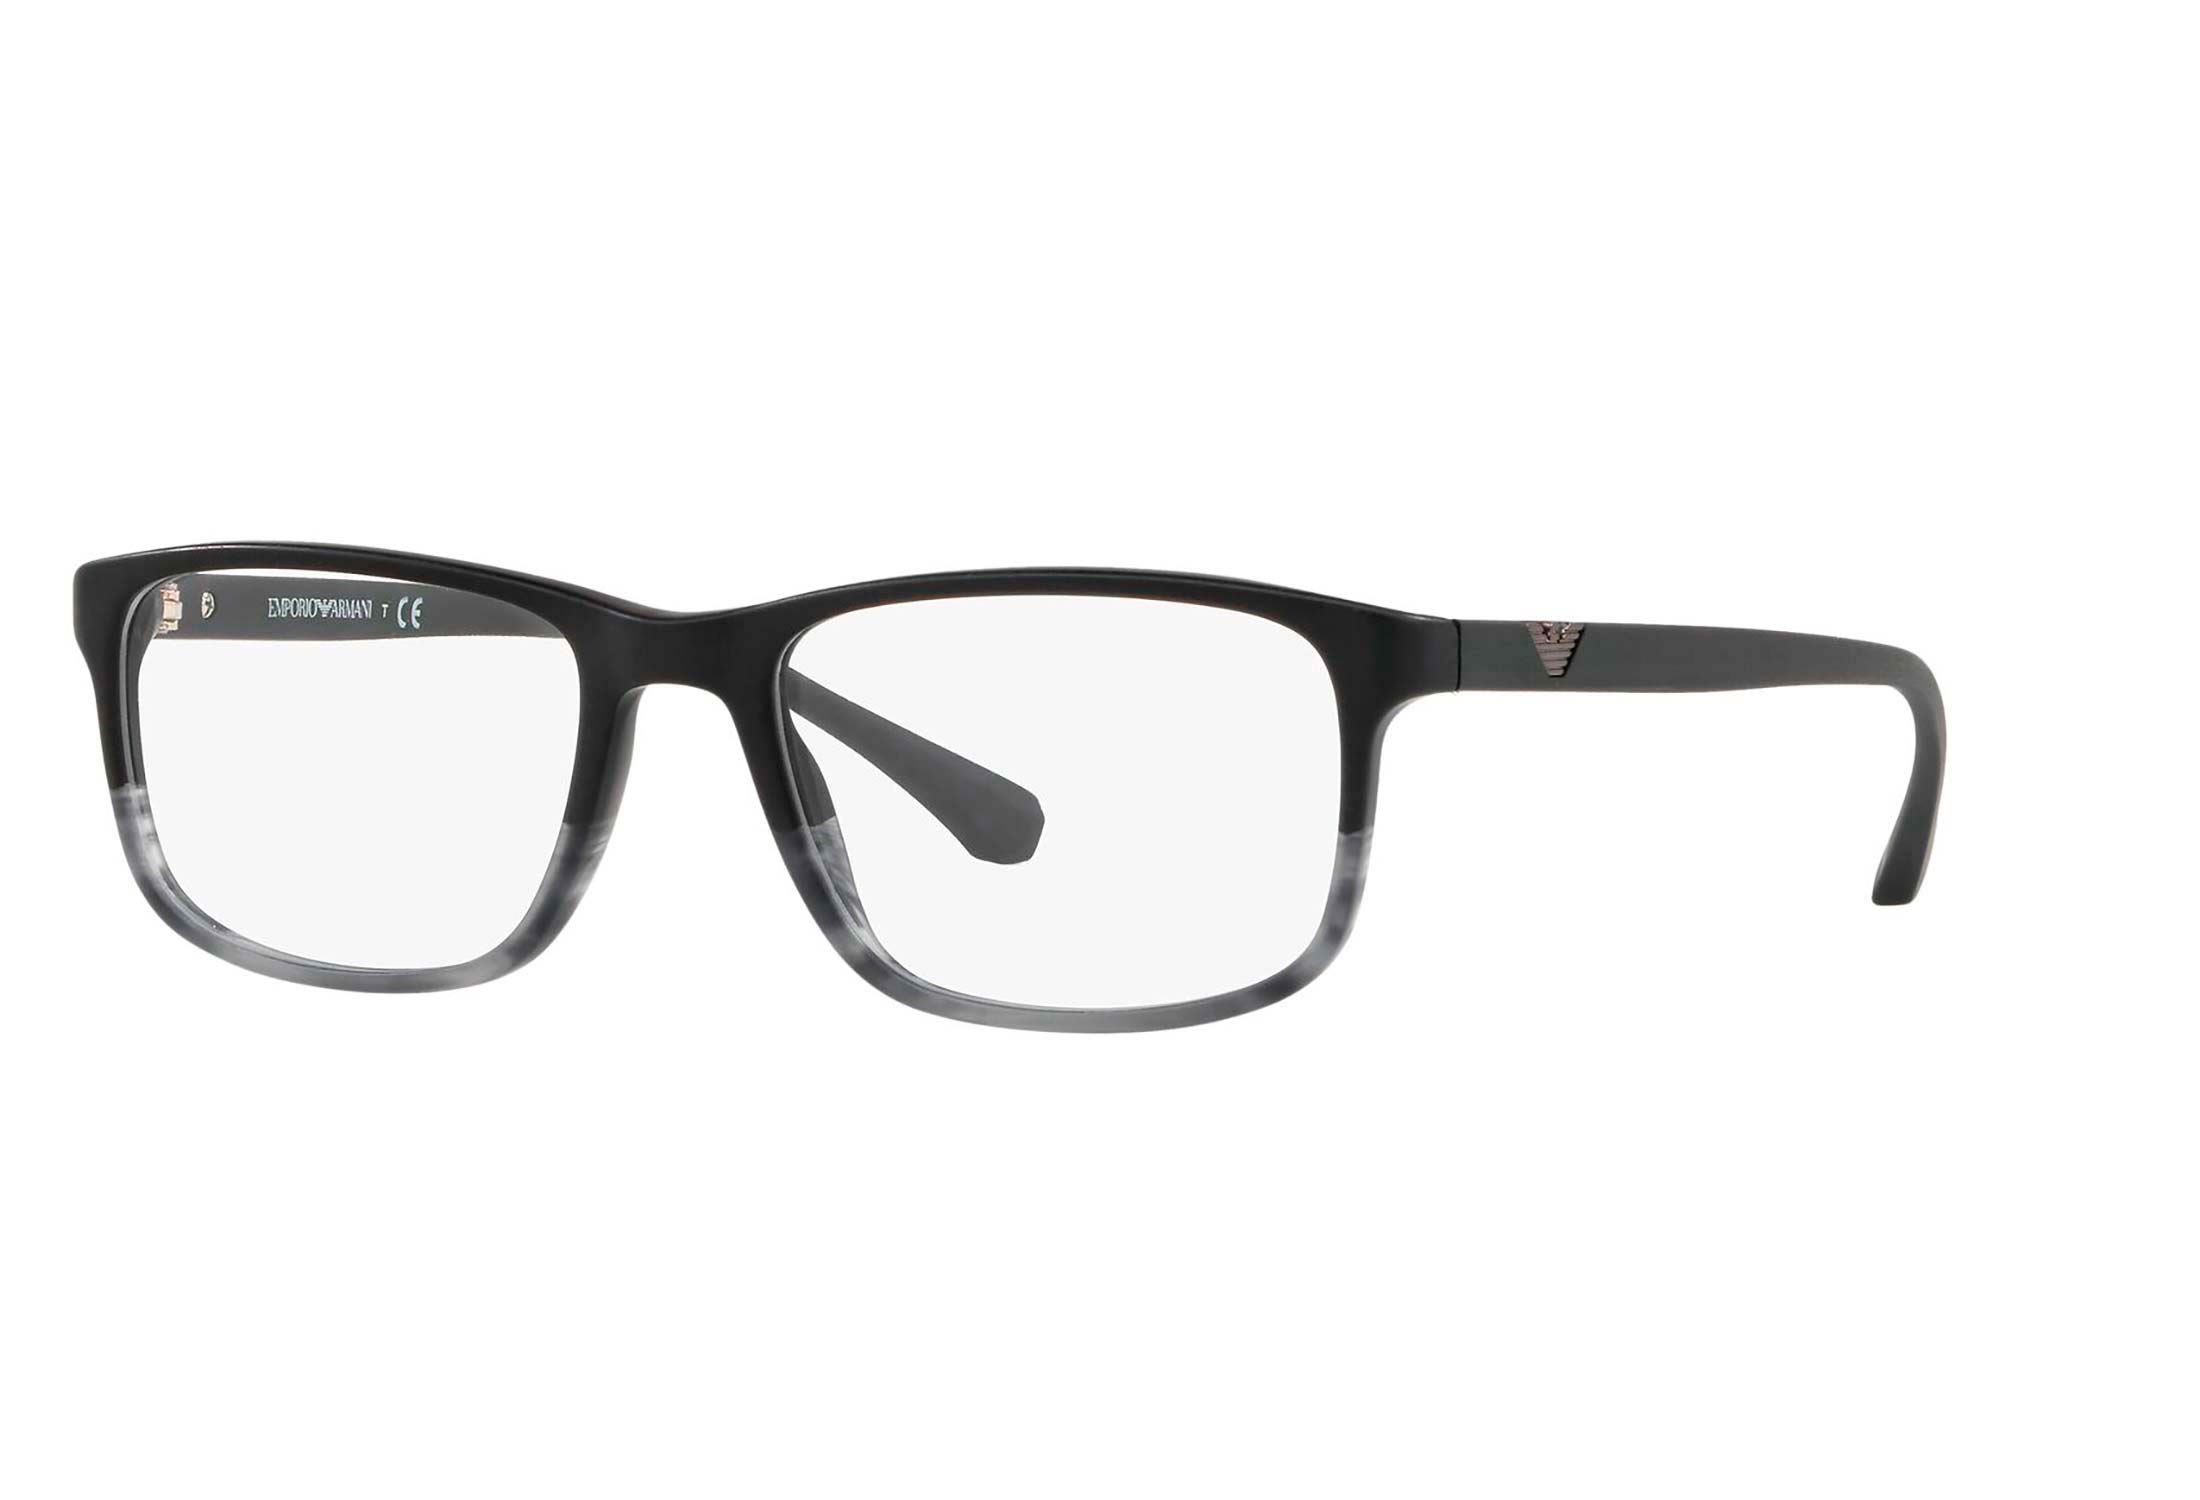 Emporio Armani briller - ea3098 5566 - Svart, Mønstret, Medium Hel ramme i Plast - Rektangulære